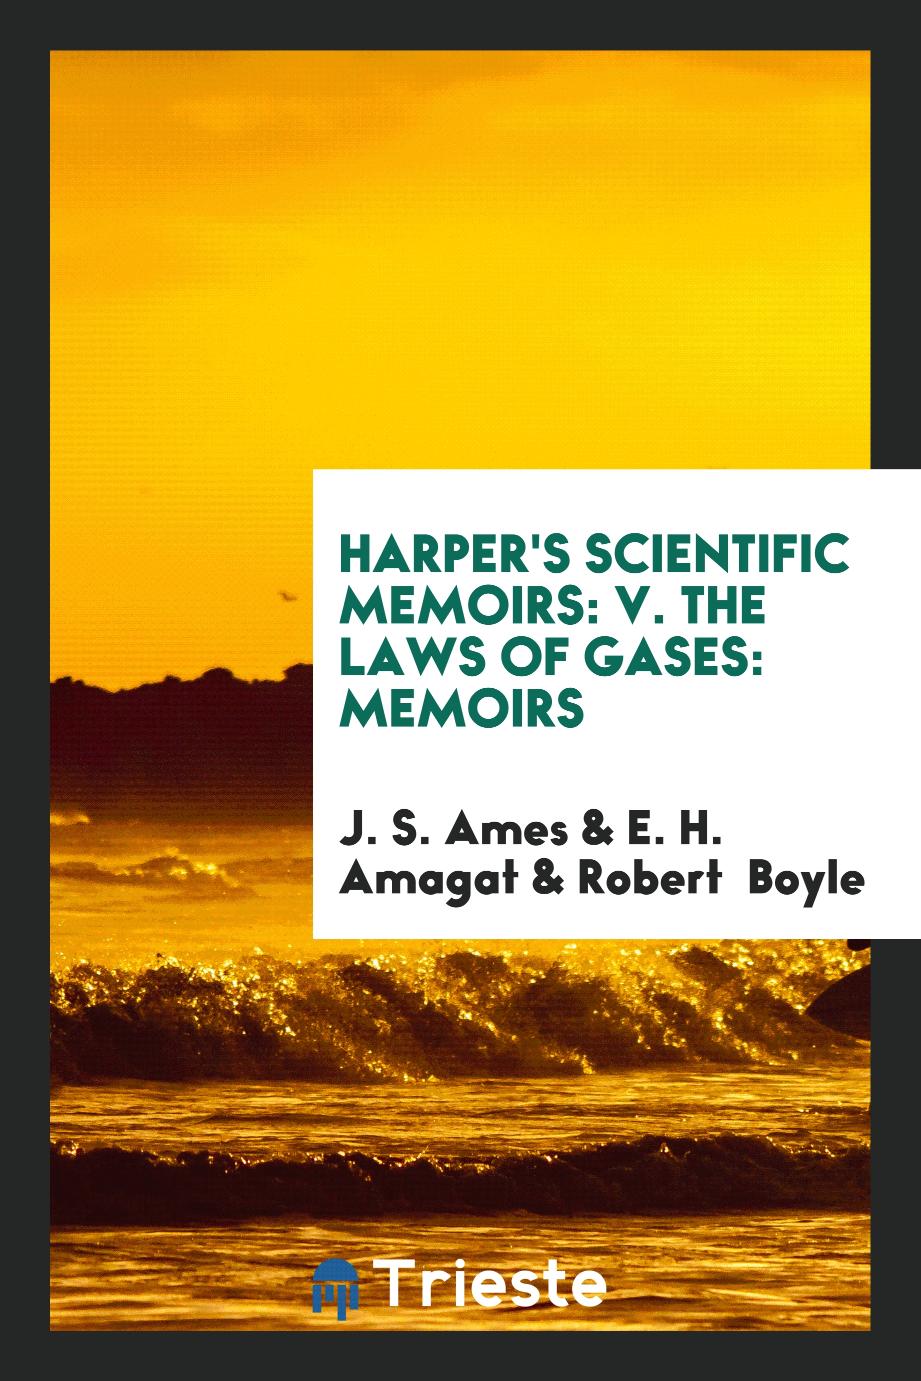 Harper's Scientific Memoirs: V. The Laws of Gases: Memoirs